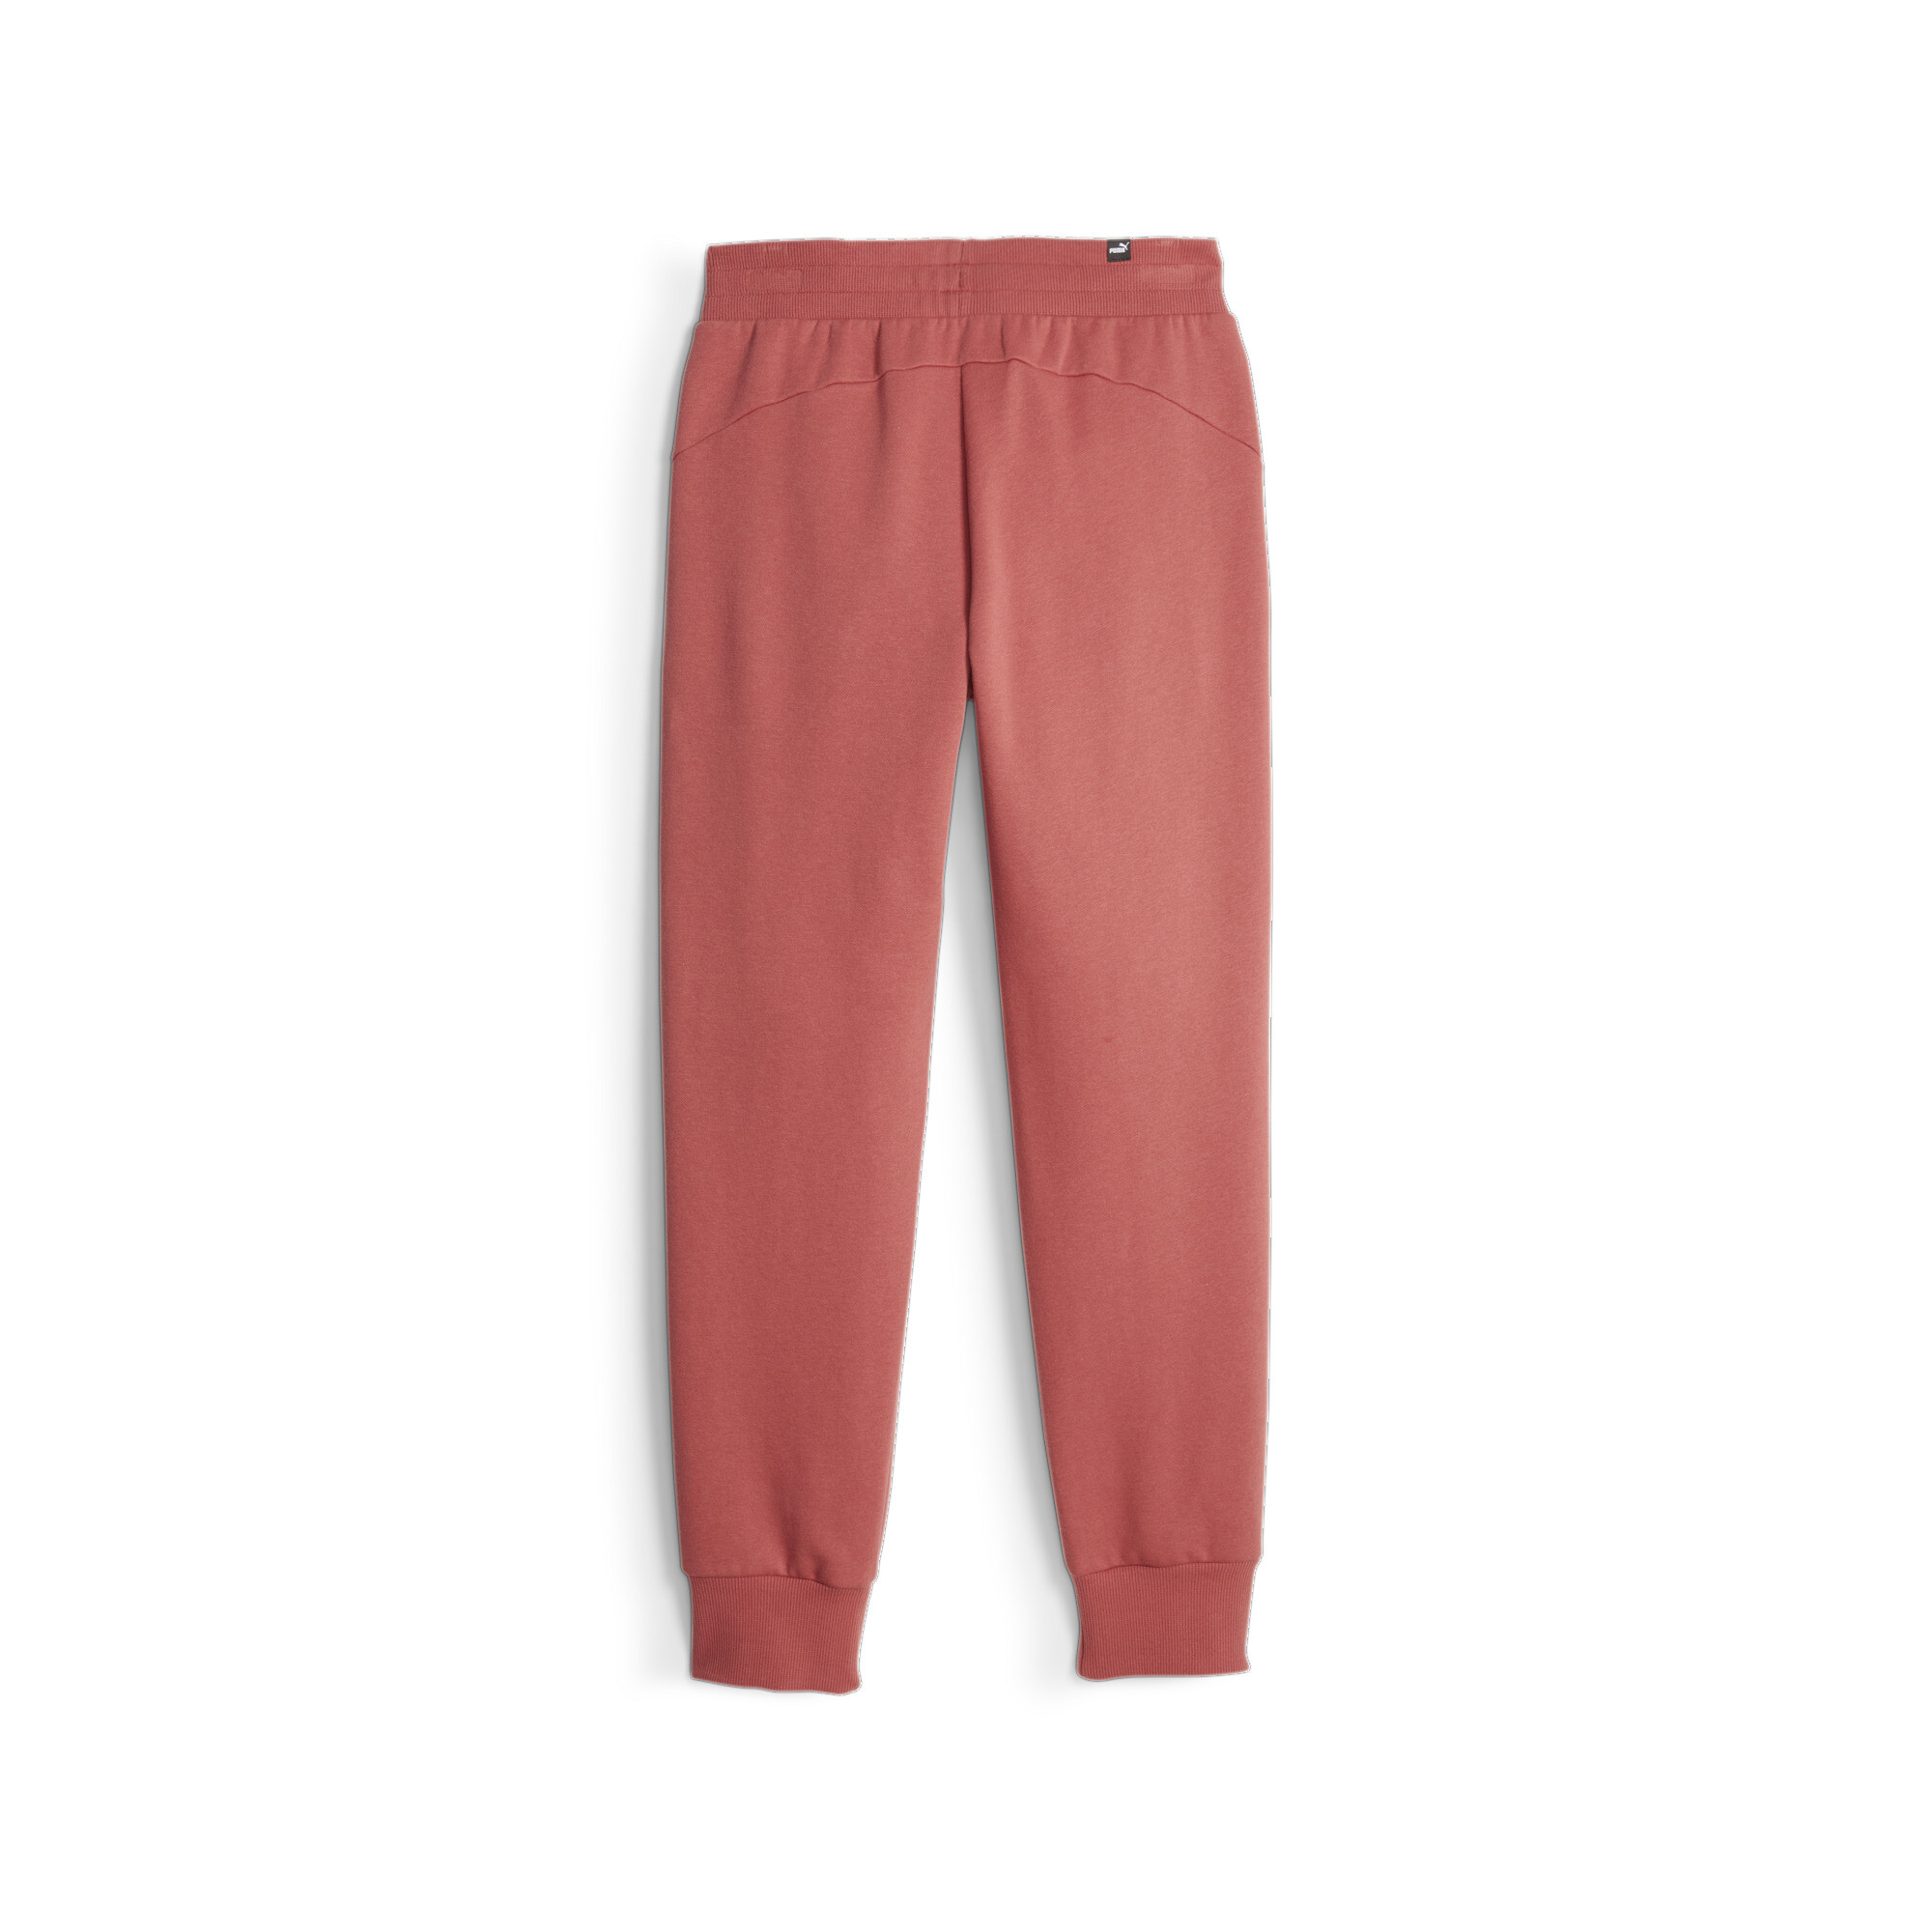 Women's Puma Essentials's Sweatpants, Red, Size 3XL, Clothing